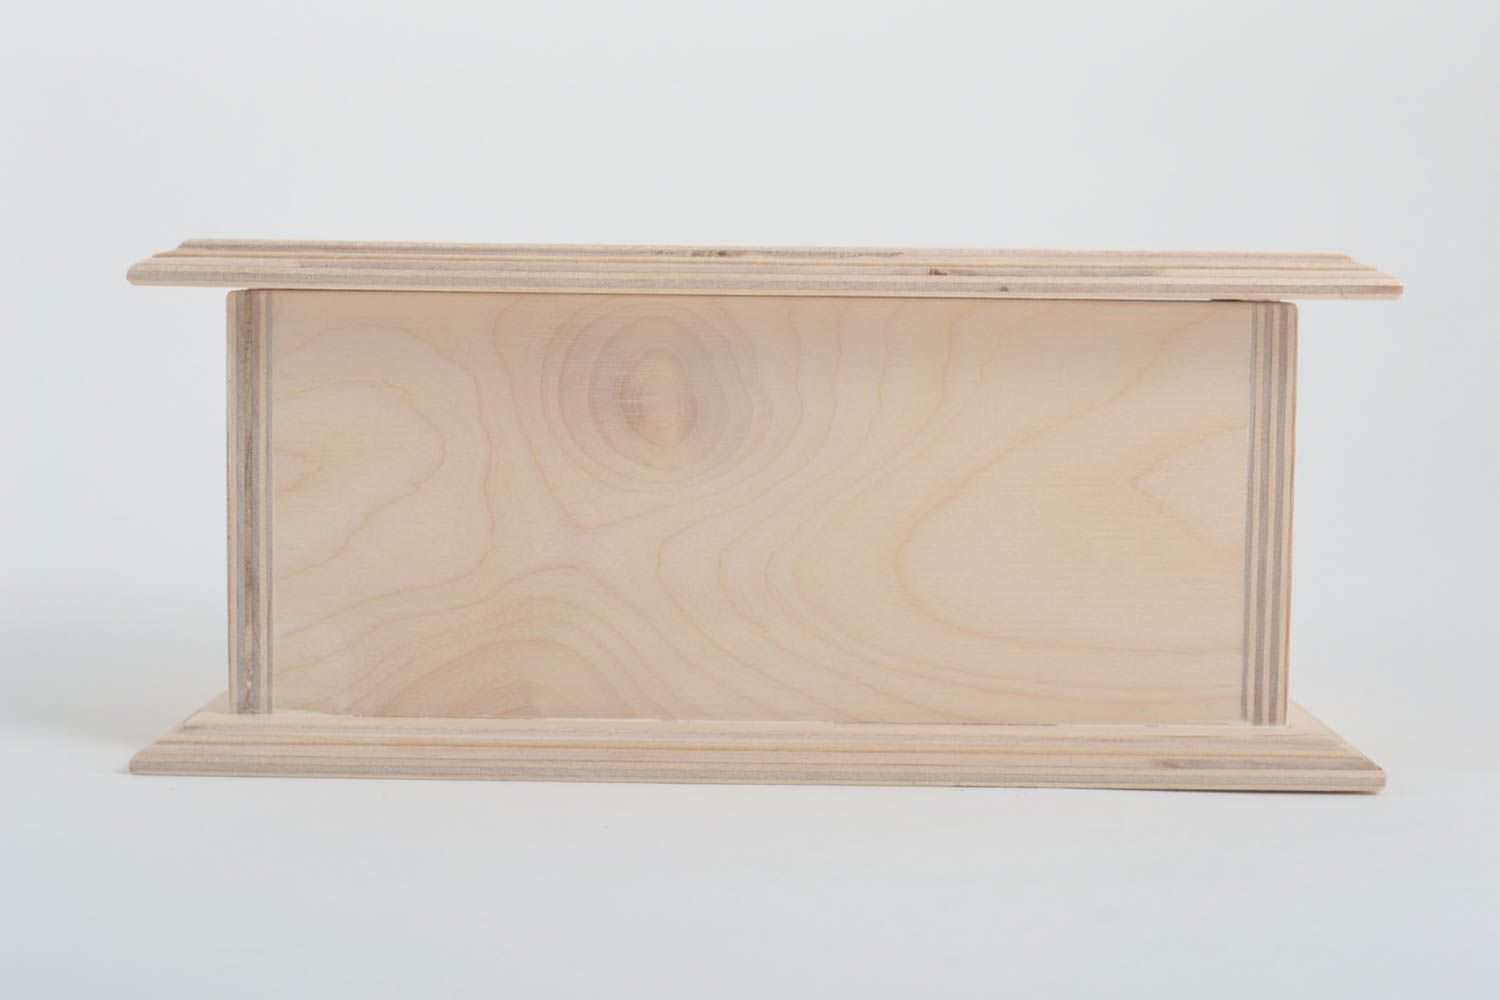 Unusual handmade wooden blank box art supplies blanks for creativity photo 4